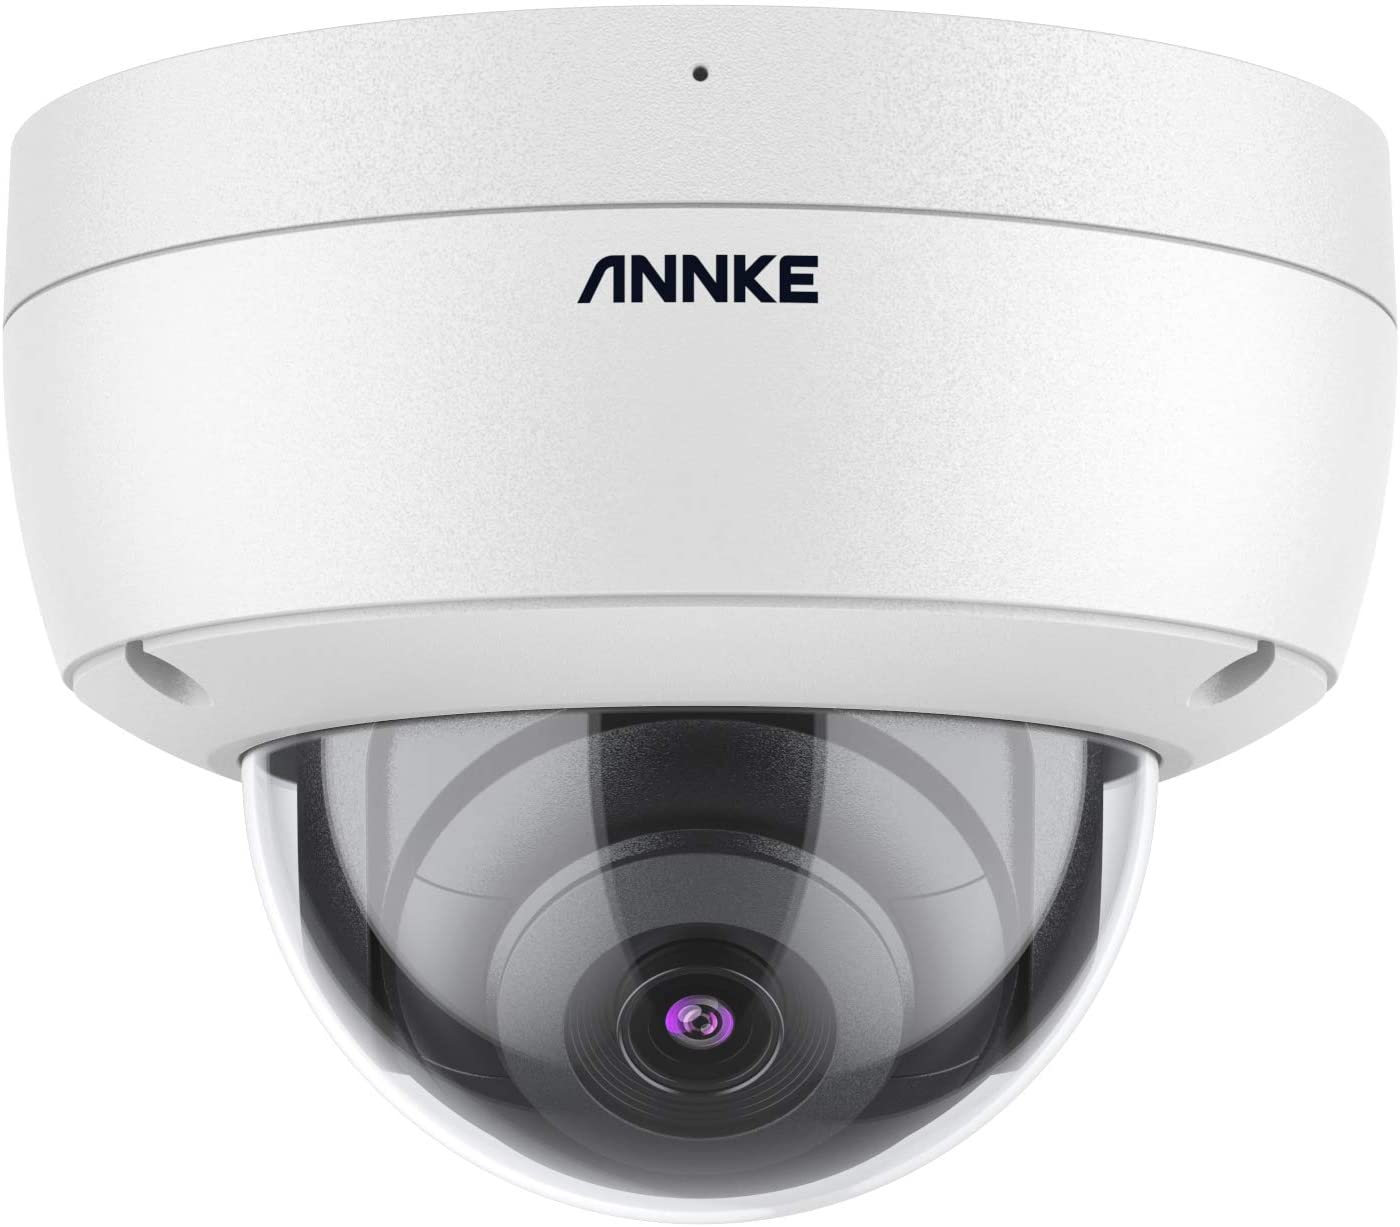 ANNKE C800 4K 8MP PoE IP Camera w/ Audio, H.265+ Dome Security Camera, RTSP, 100ft EXIR 2.0 Night Vision with Sony Sensor, IK10 & IP67 Weatherproof (Not PTZ)